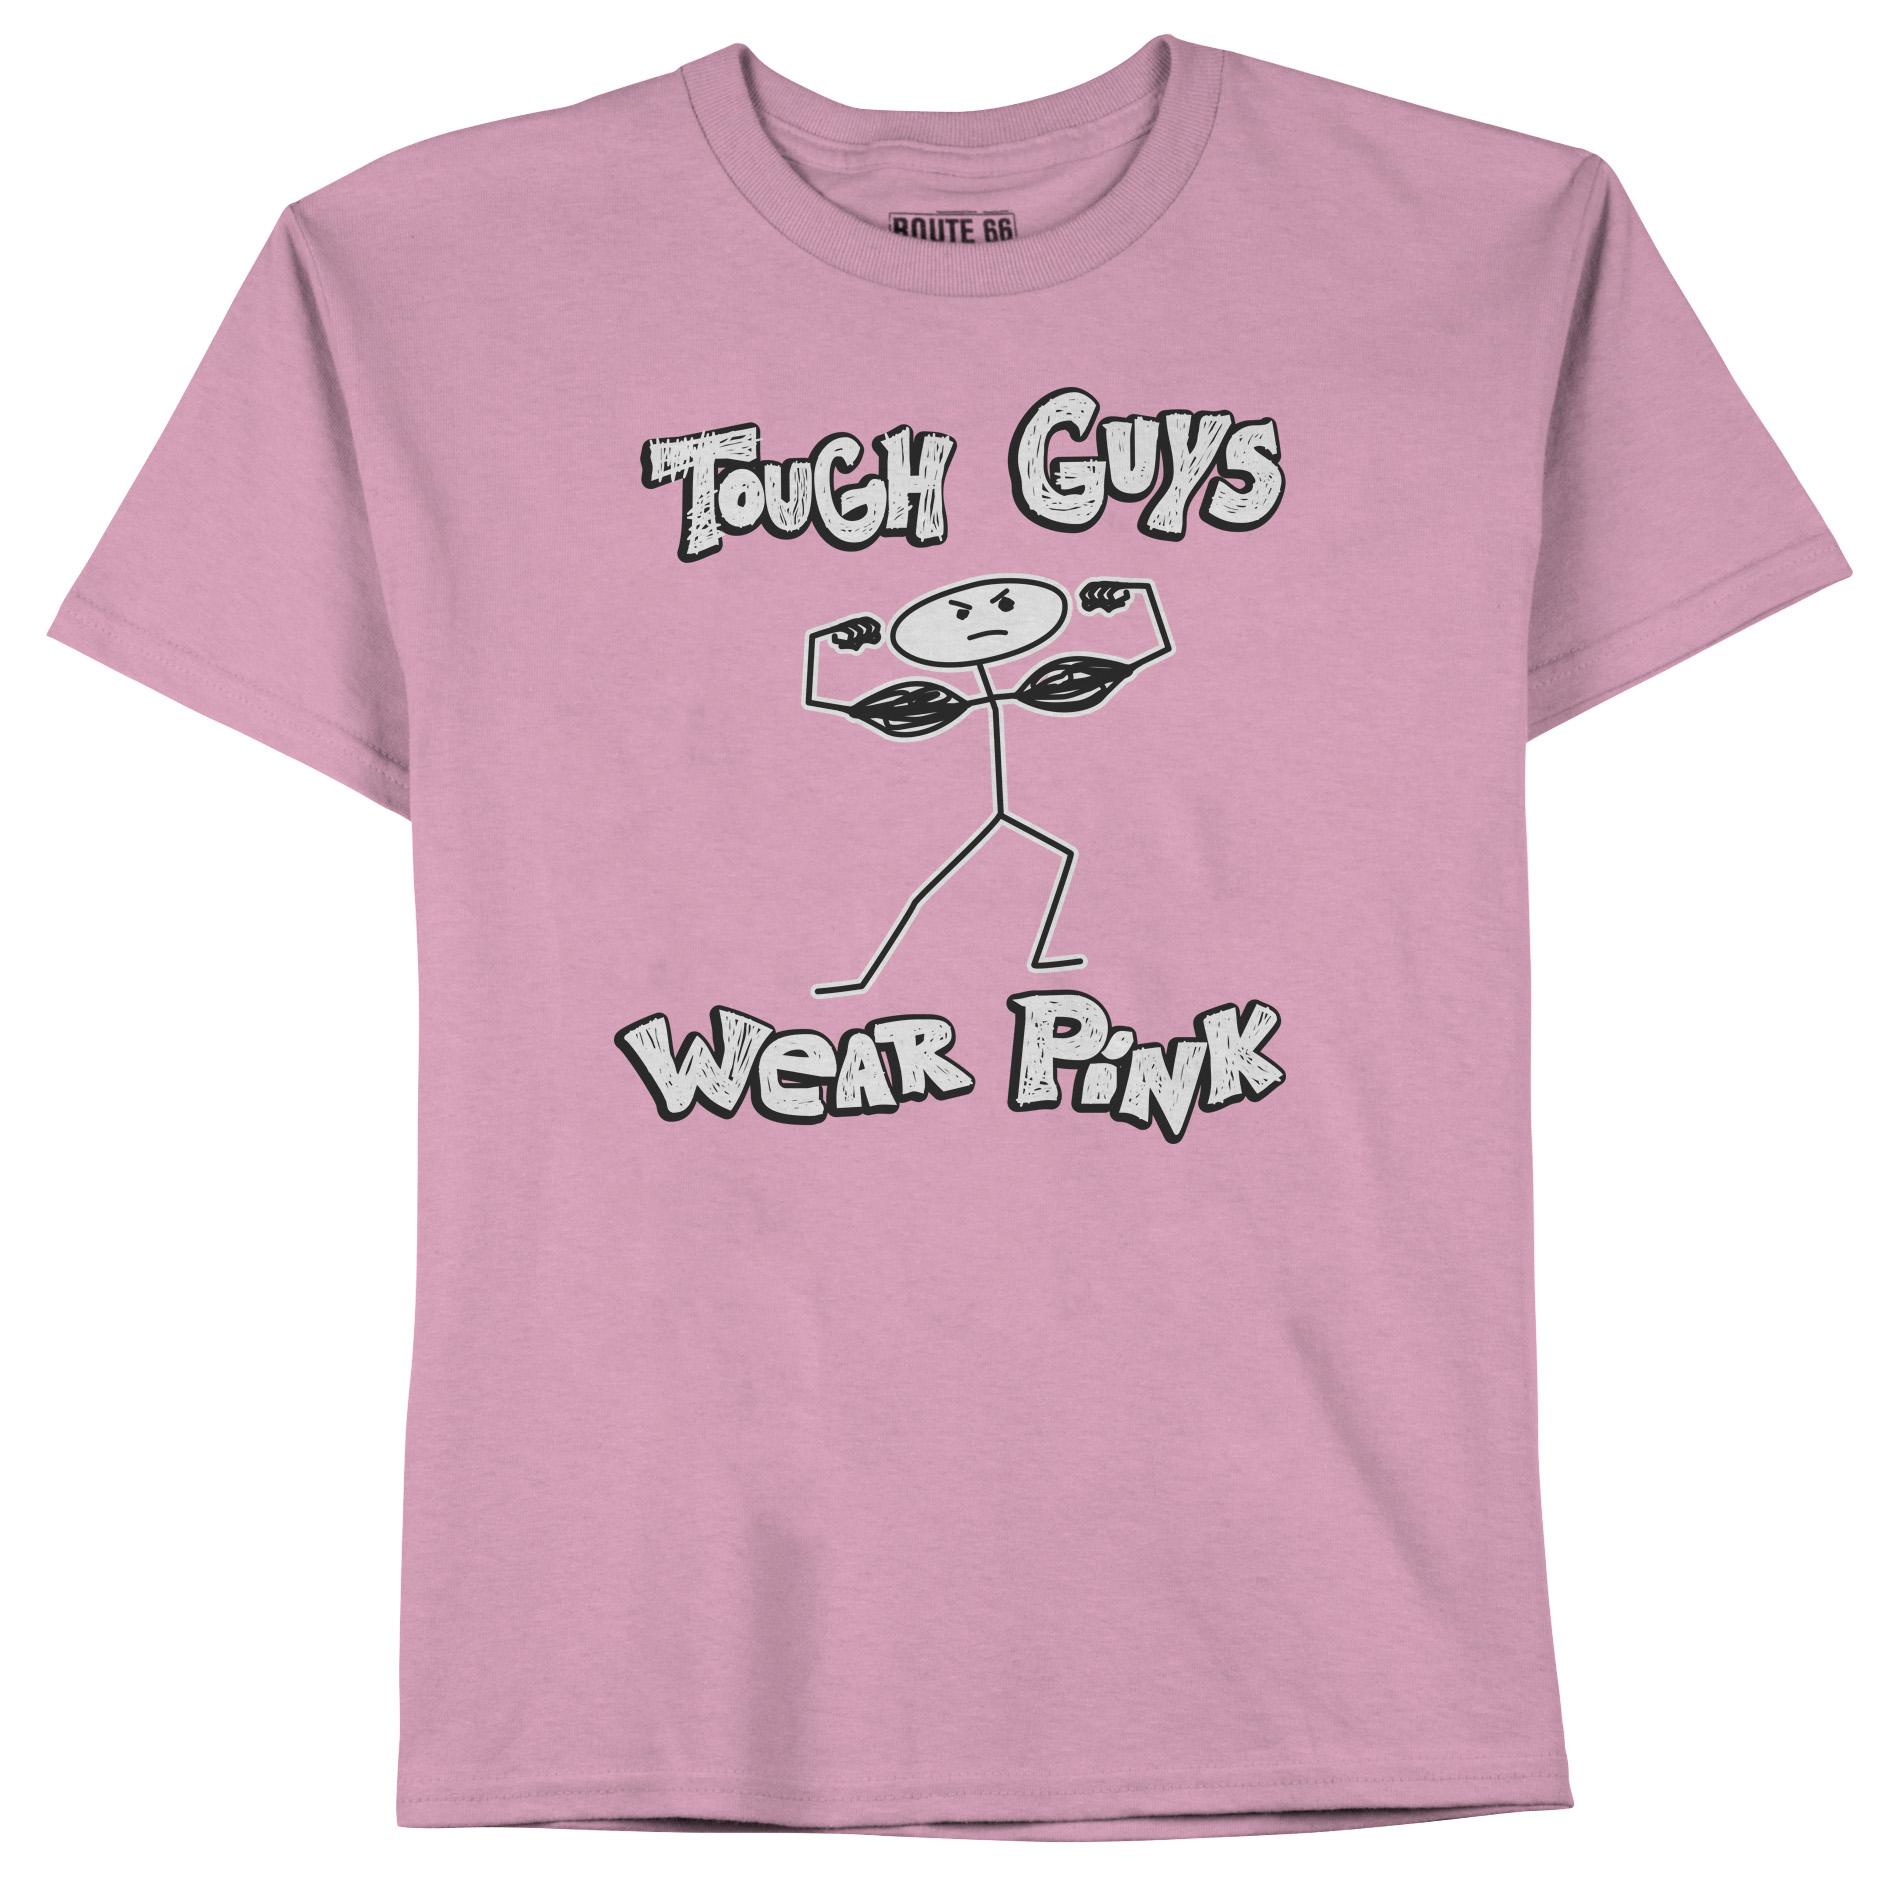 Route 66 Boy's Graphic T-Shirt - Tough Guys Wear Pink